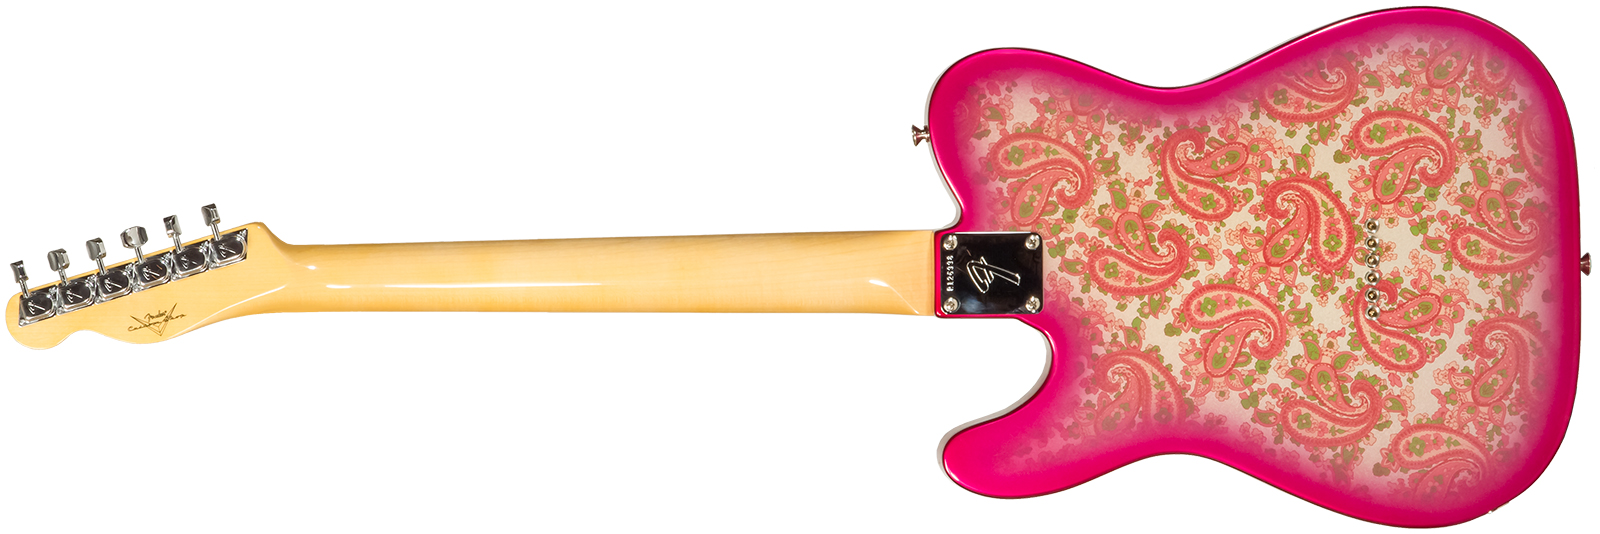 Fender Custom Shop Tele Vintage Custom 1968 2s Ht Mn #r126998 - Nos Pink Paisley - Televorm elektrische gitaar - Variation 1